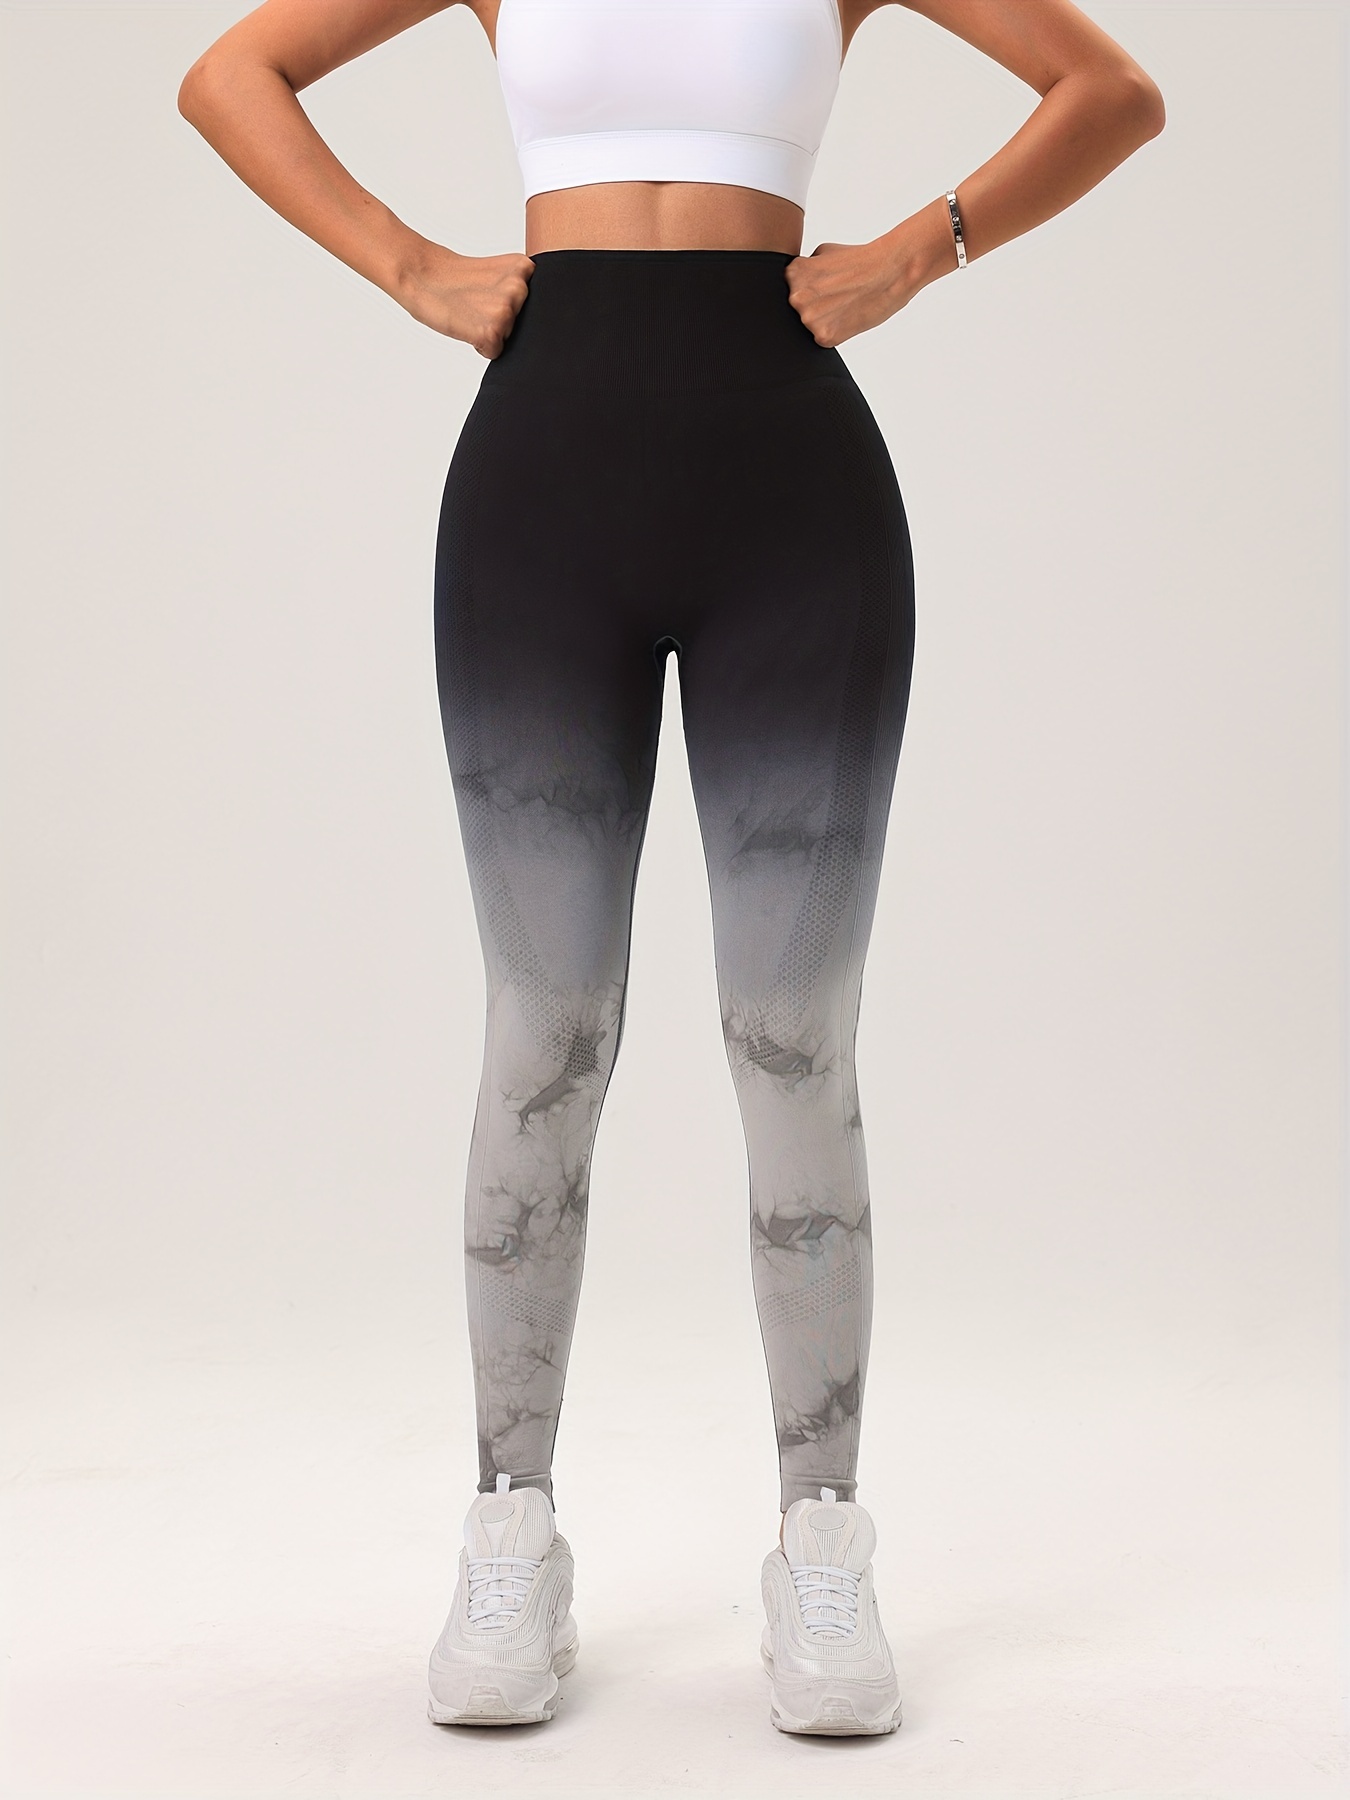 Aayomet Leggings With Pockets for Women Yoga Pants Tie Dye Lift Ladies  Sports Yoga Pants (, S) 